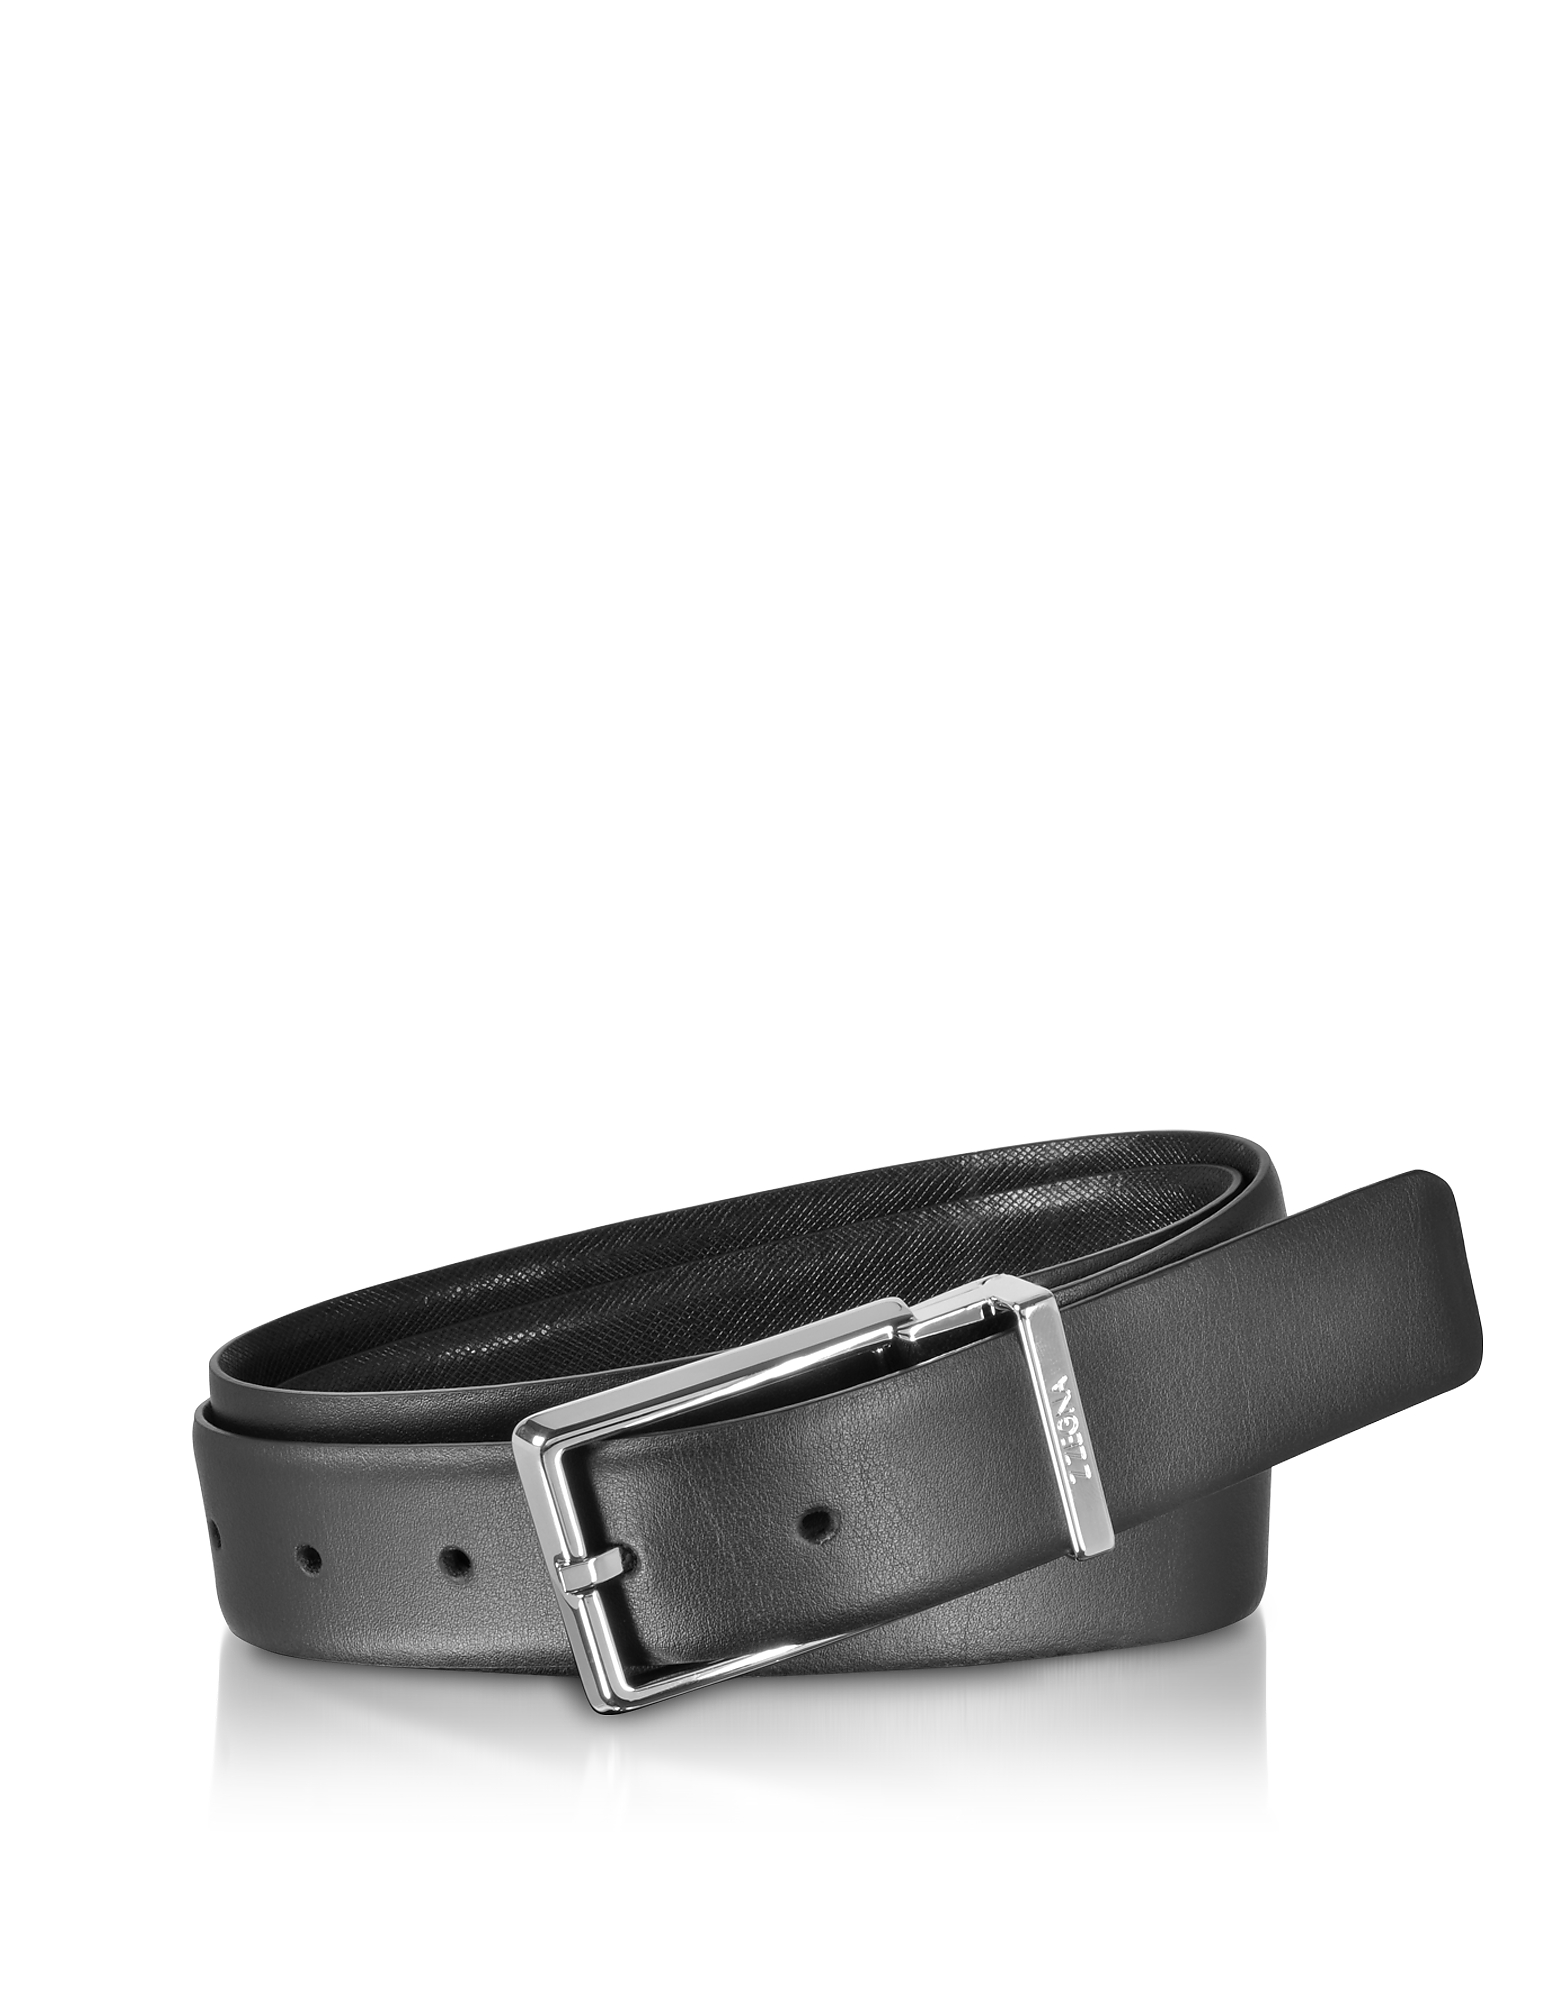 

Black Smooth/Embossed Leather Adjustable and Reversible Men's Belt